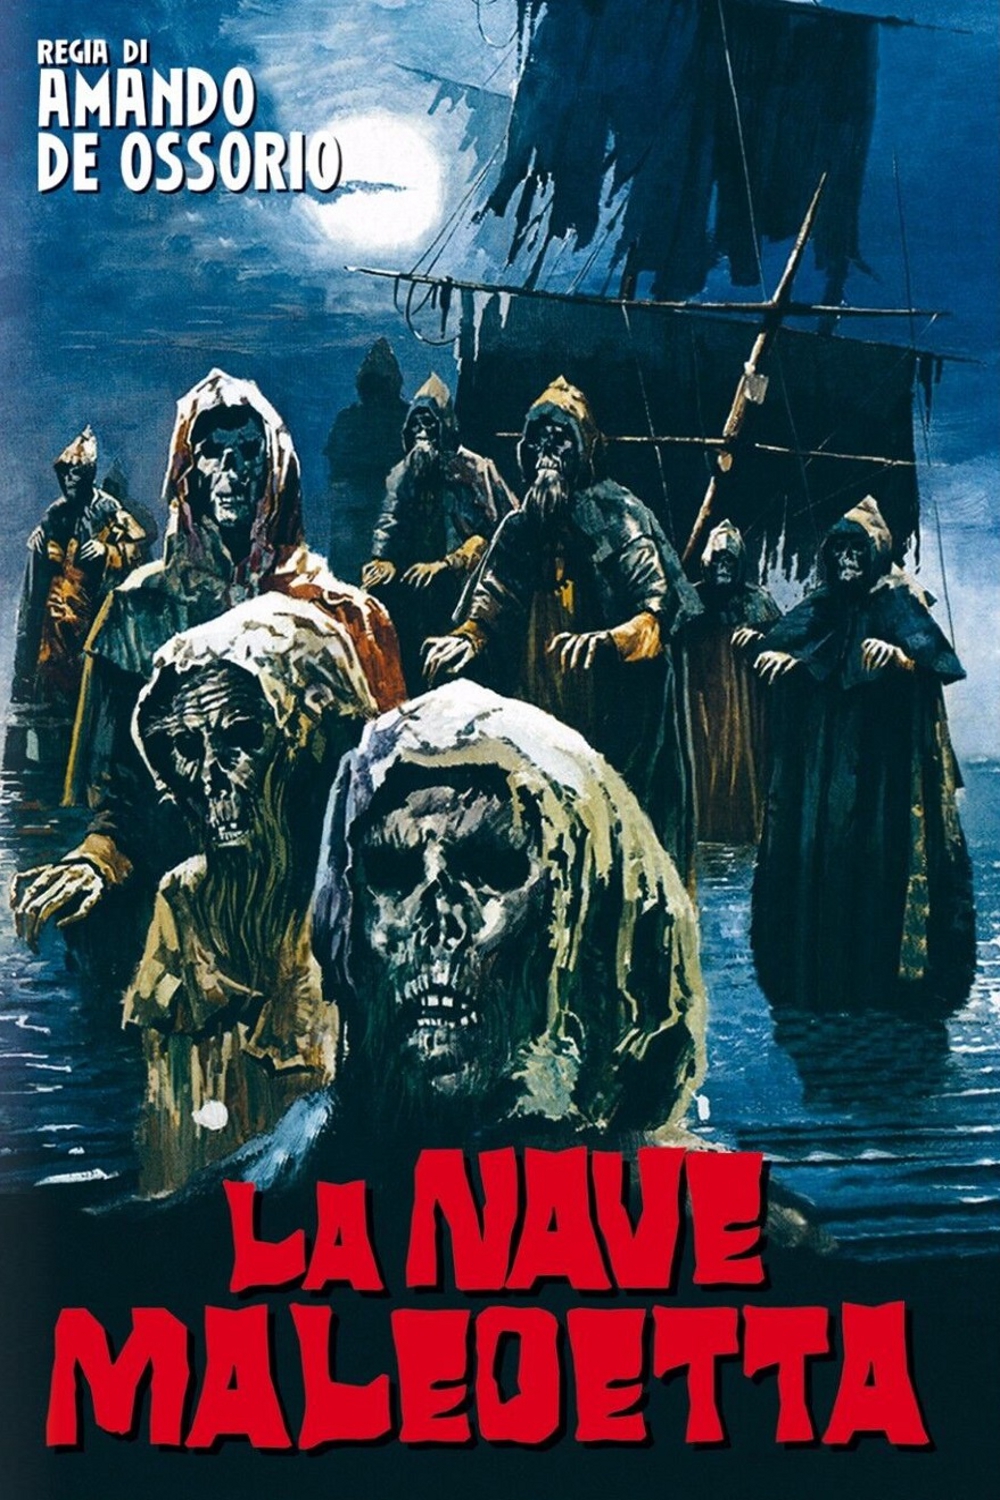 La nave maledetta [HD] (1974)